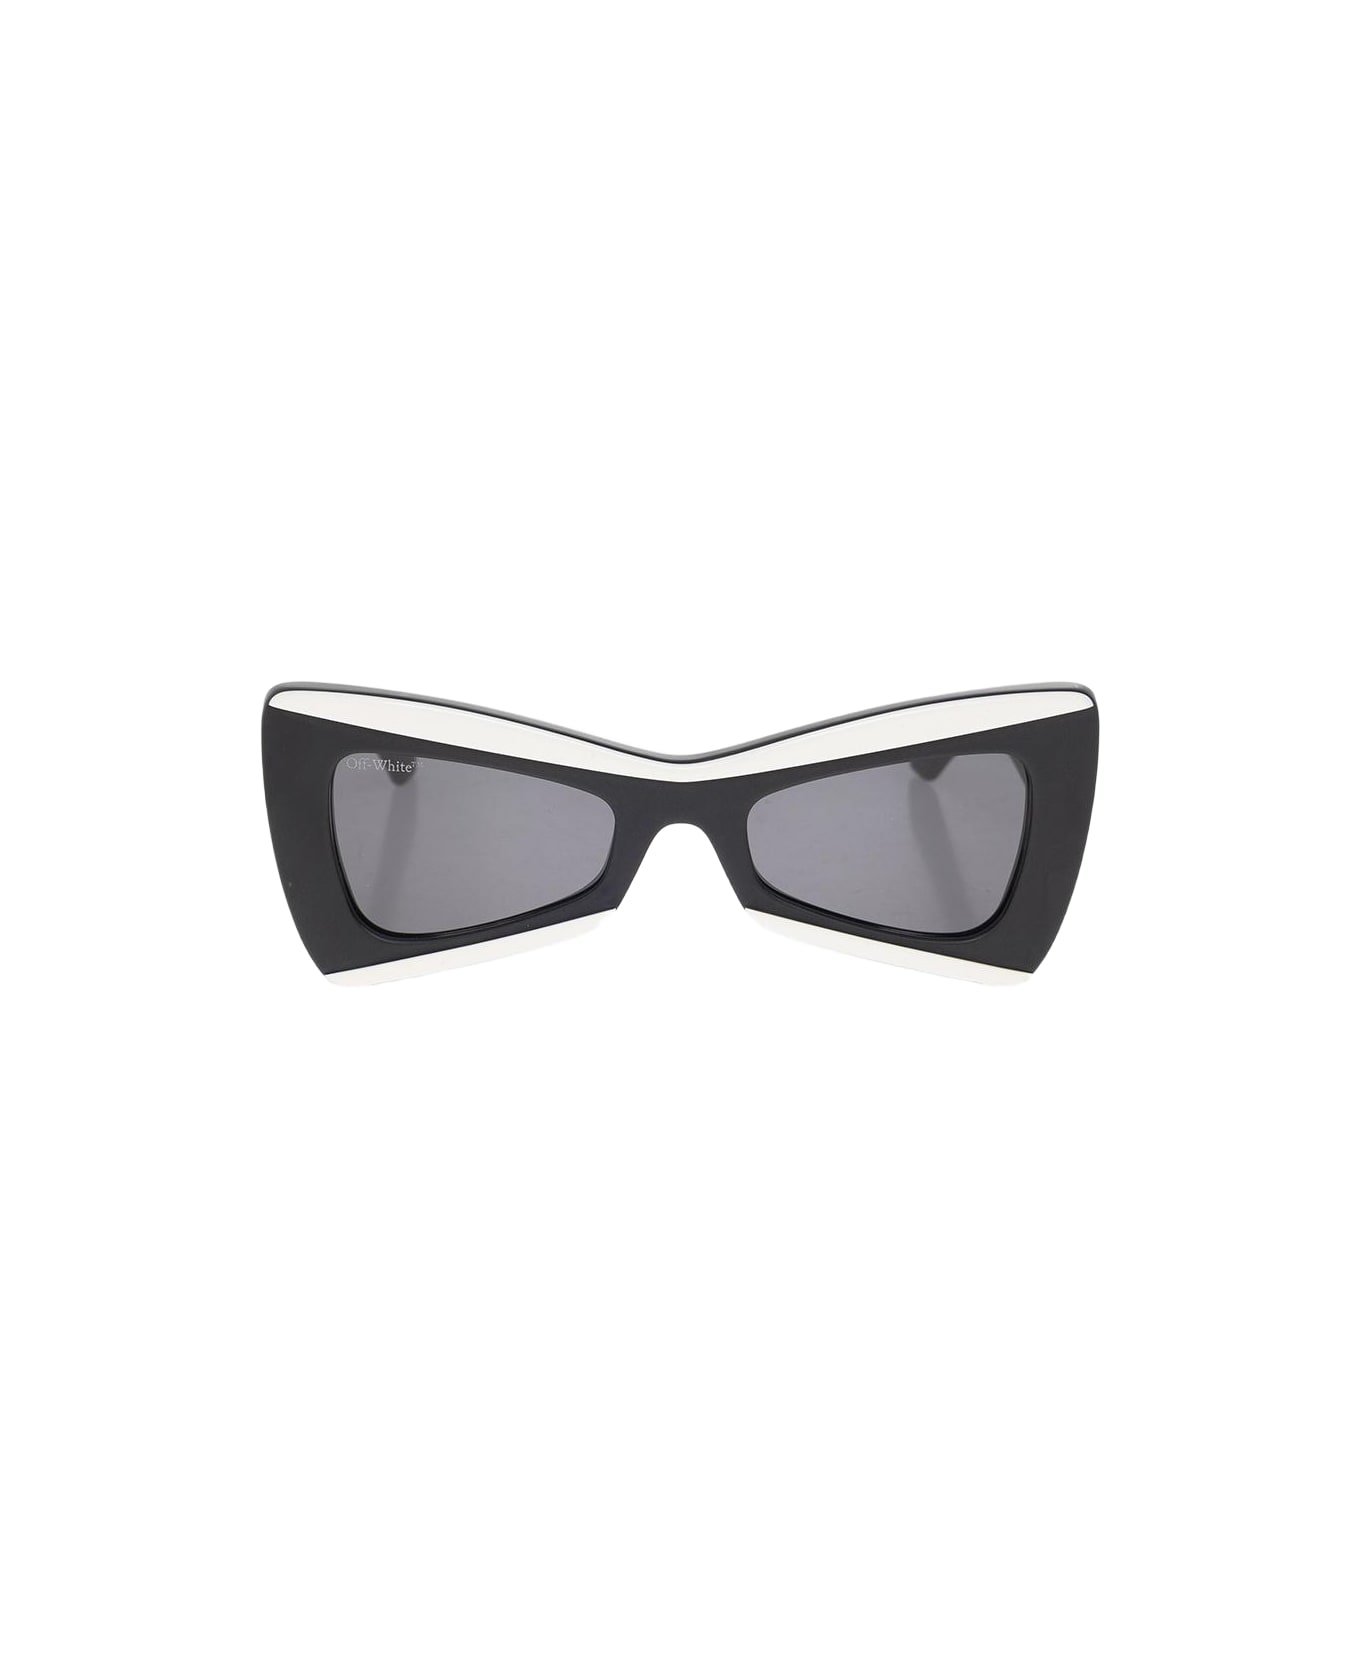 Off-White 'nashville' Sunglasses - Black/dark grey サングラス